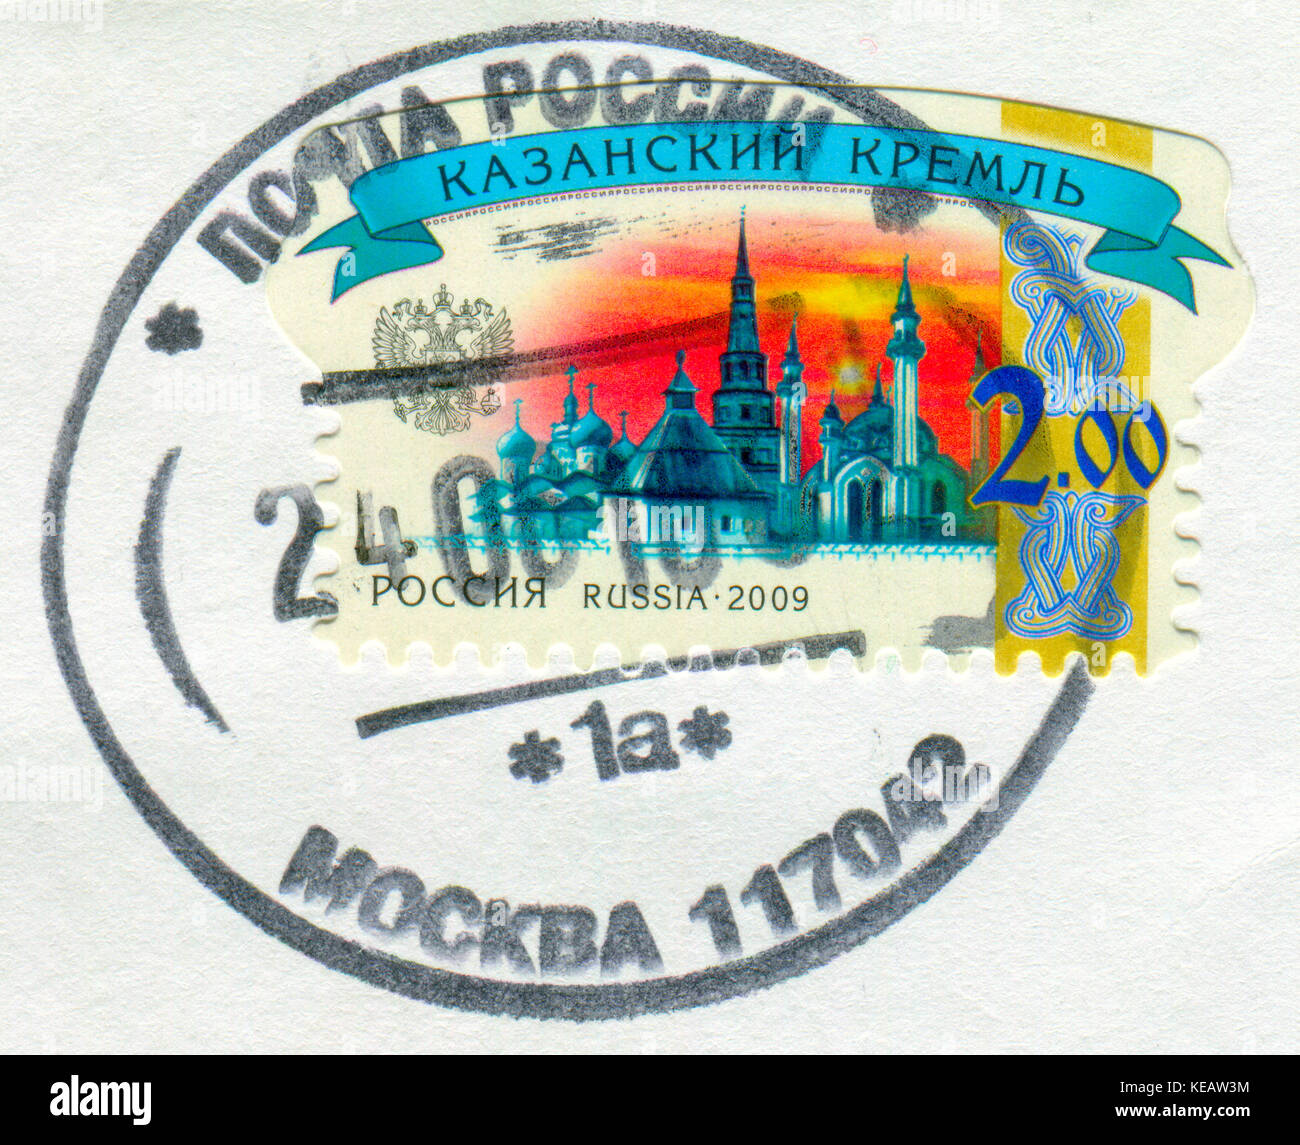 Gomel, Bélarus, 13 octobre 2017, de timbres en Russie montre libre du Kremlin de Kazan, vers 2009. Banque D'Images